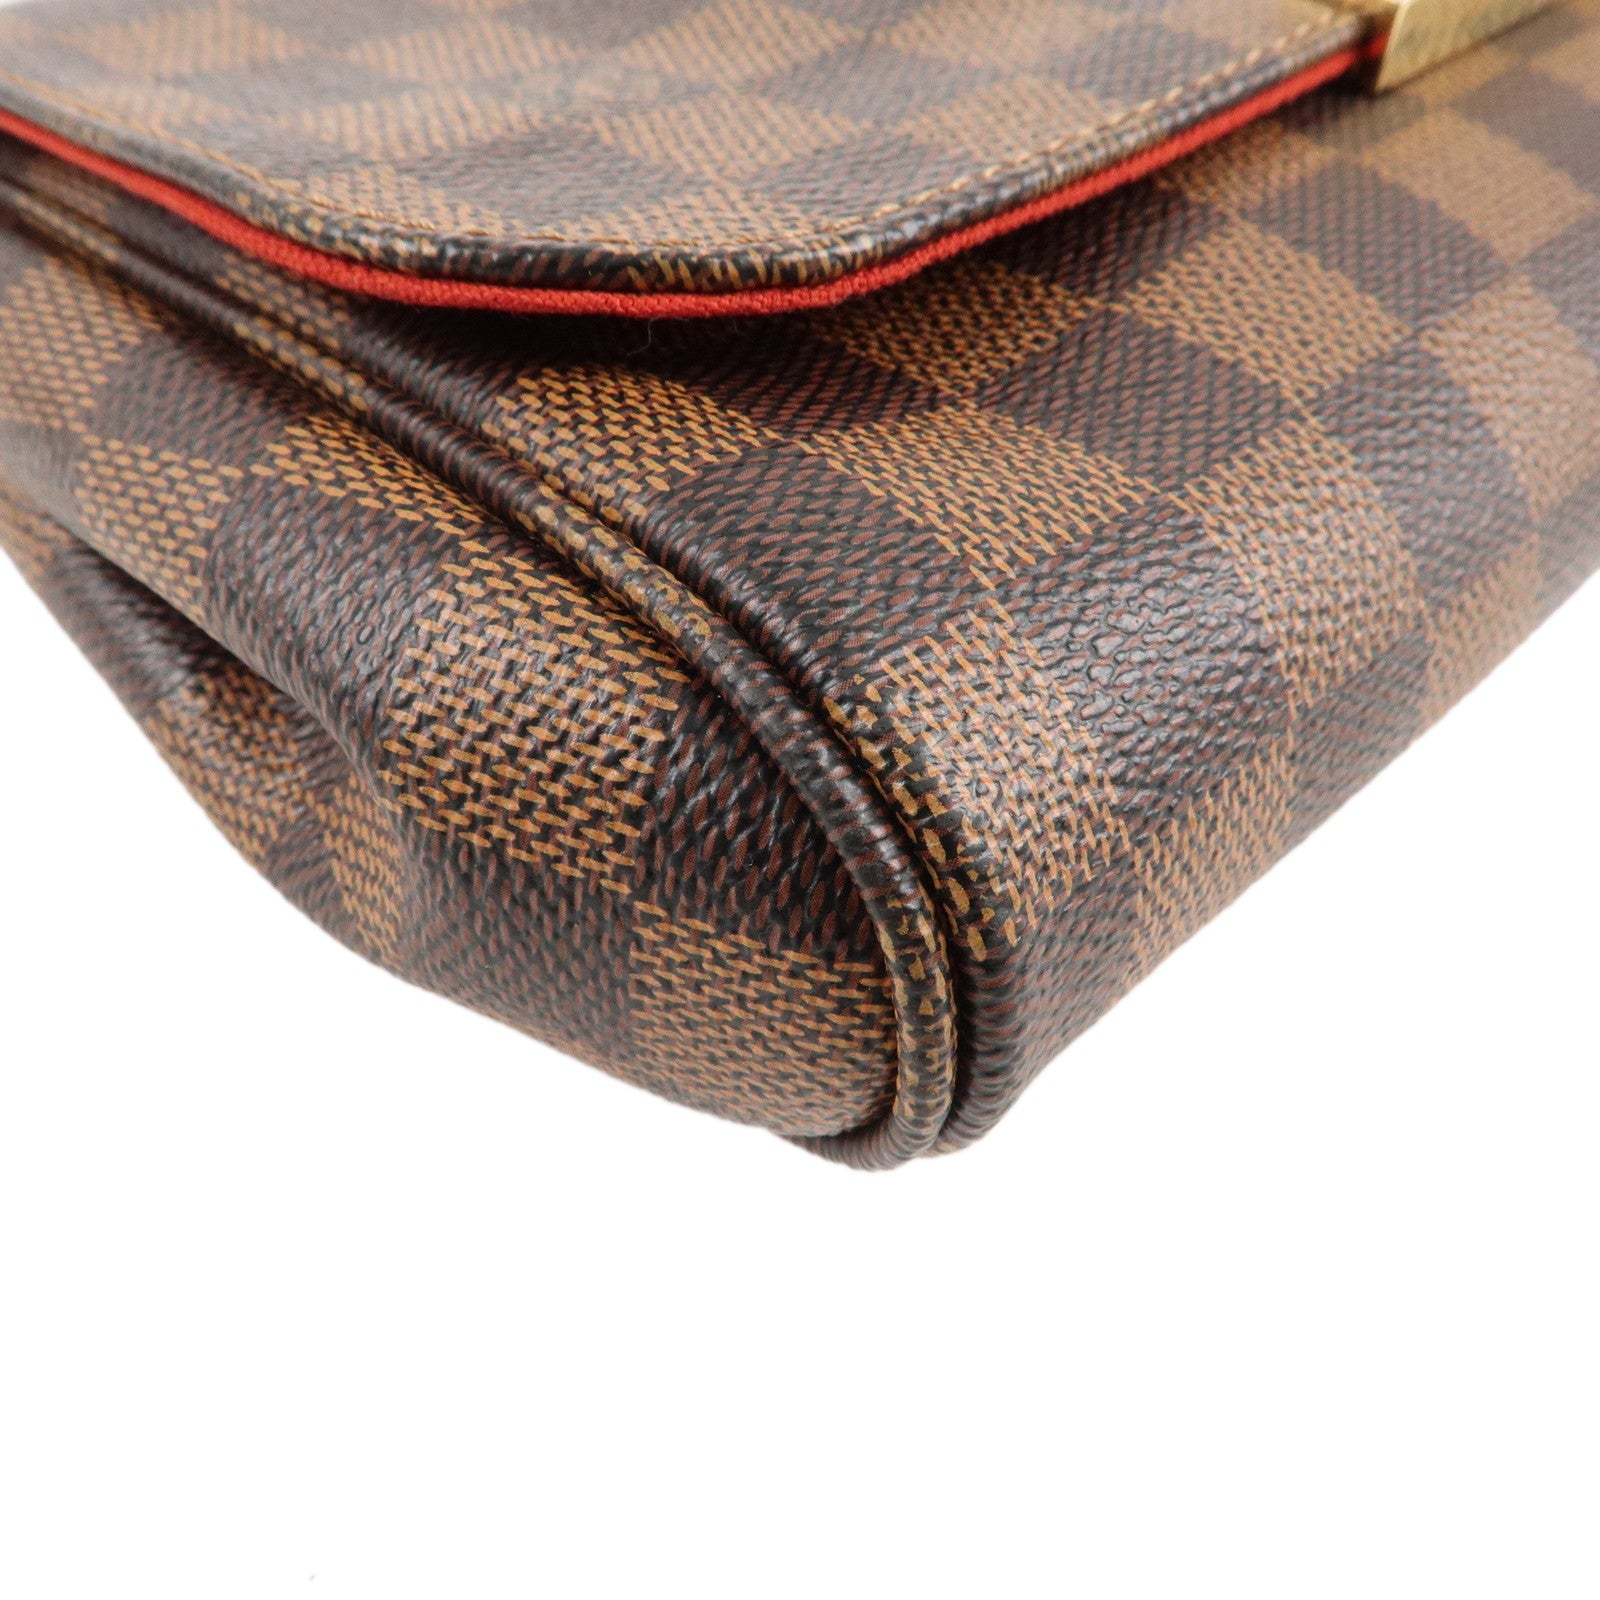 Louis Vuitton Damier Ebene Canvas Favorite Bag,Brown